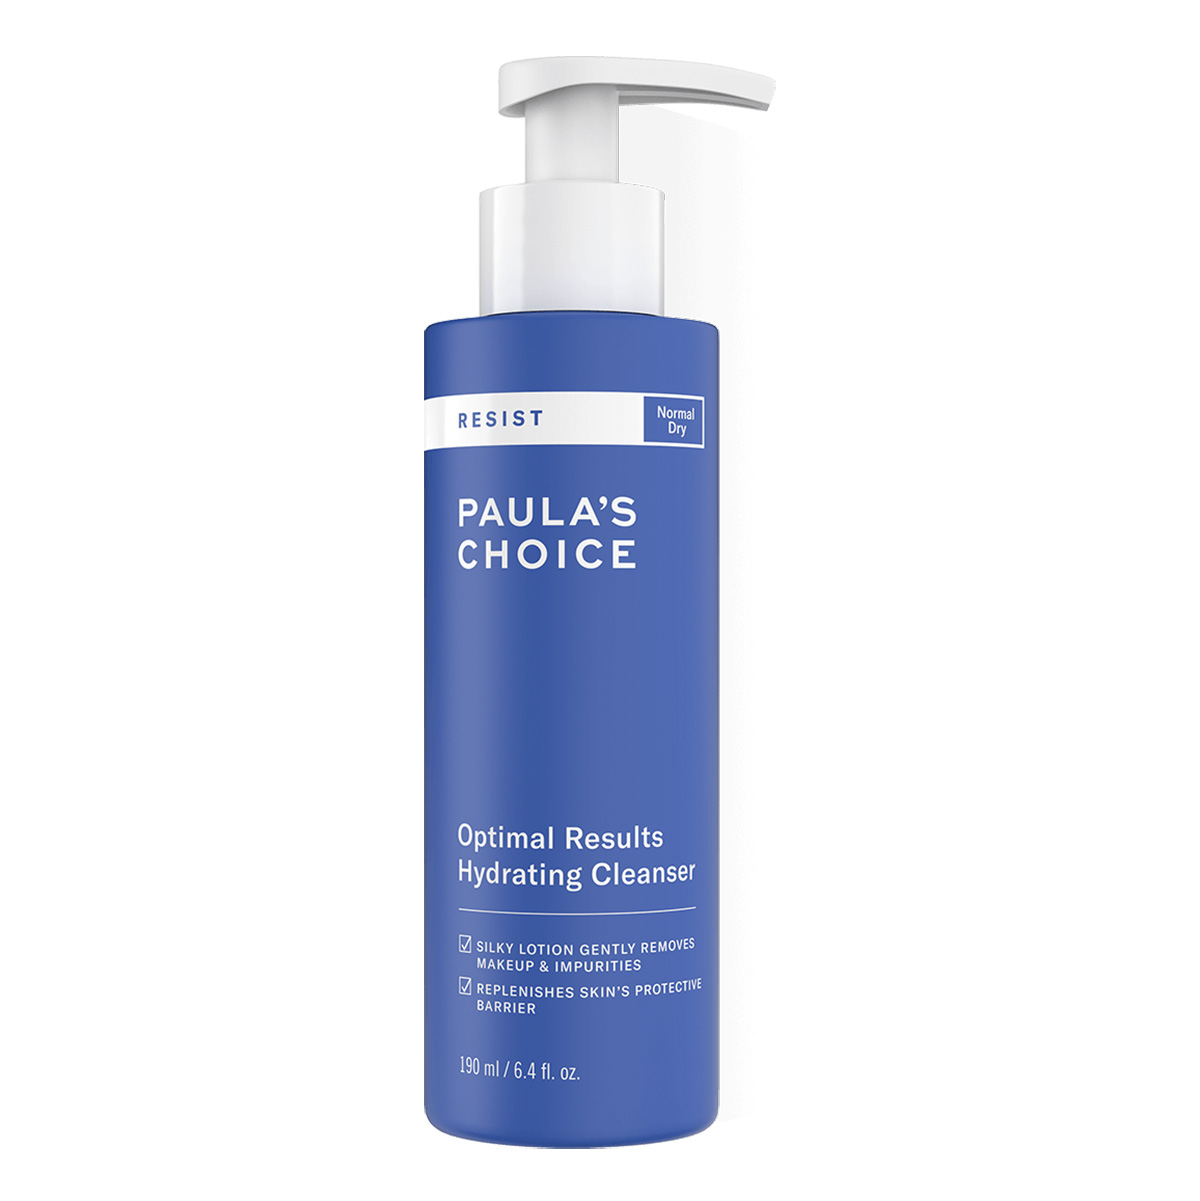 Paula's Choice Resist Anti-Aging Hydrating Cleanser 190Ml